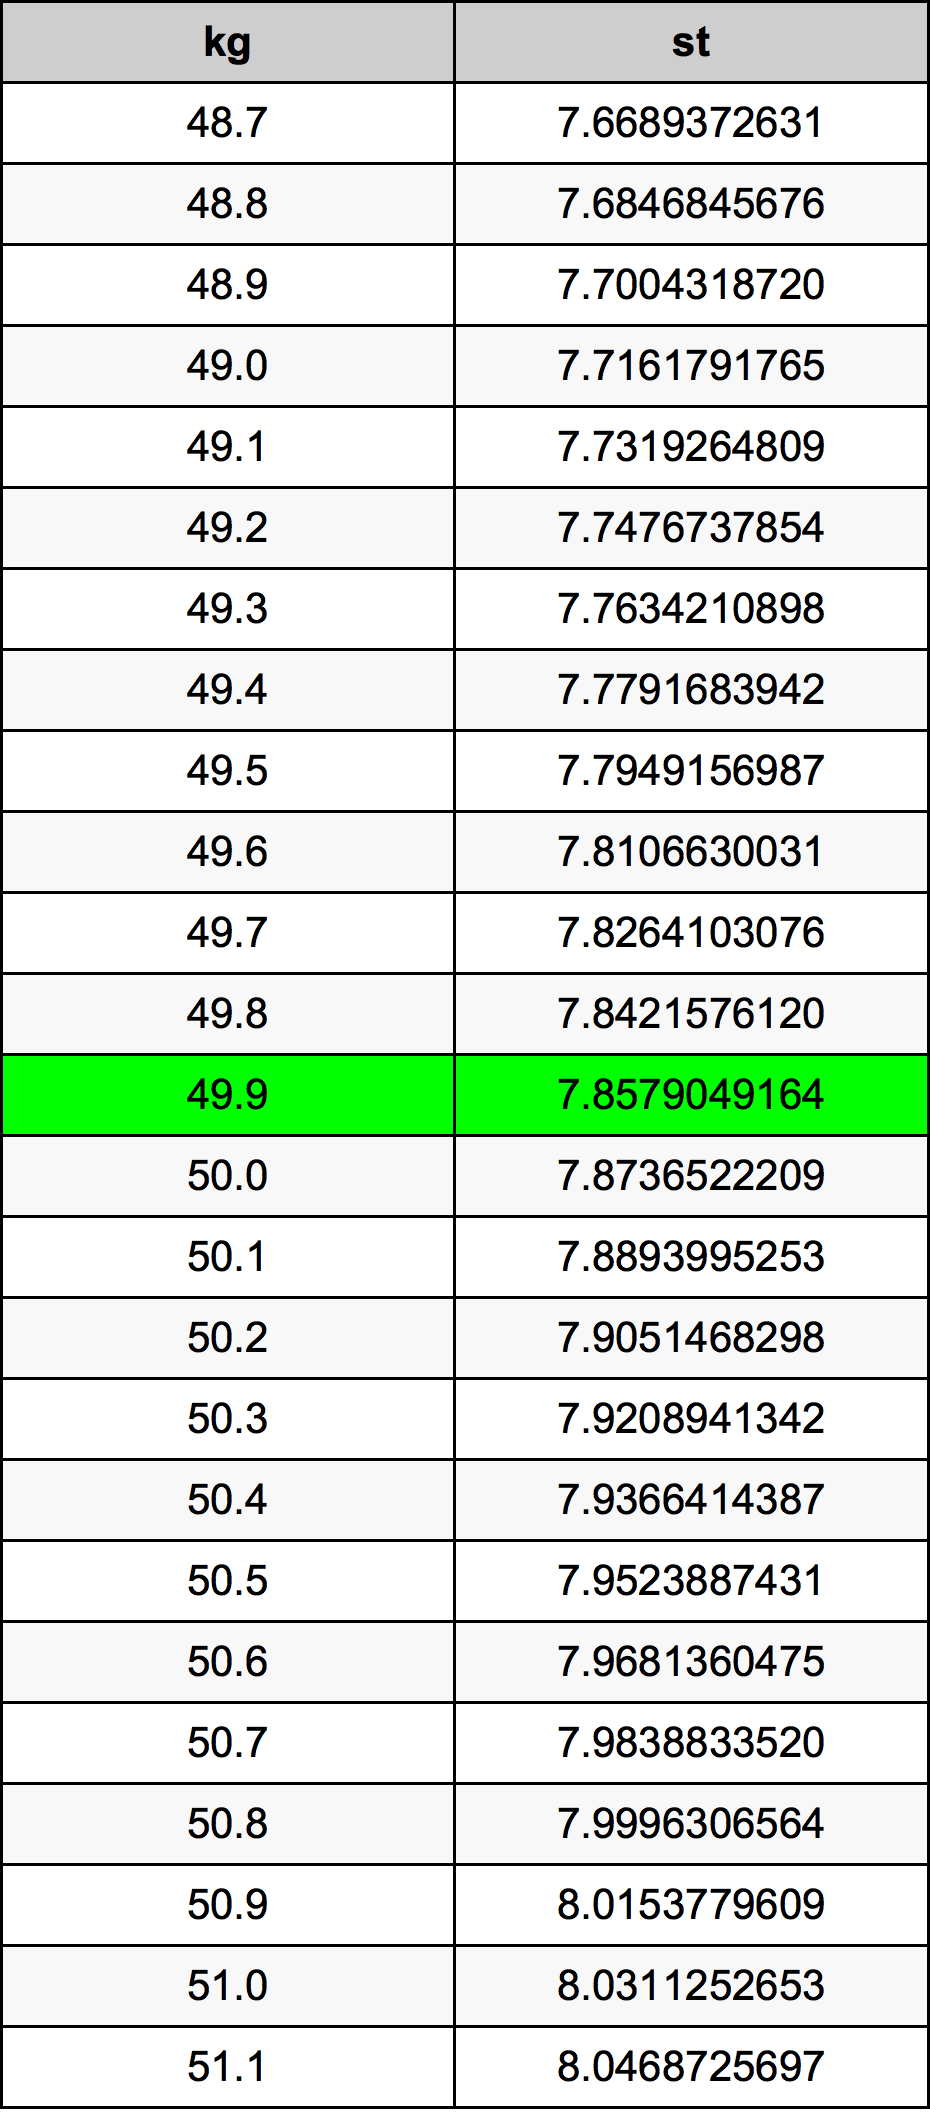 49.9 Kilogramma konverżjoni tabella